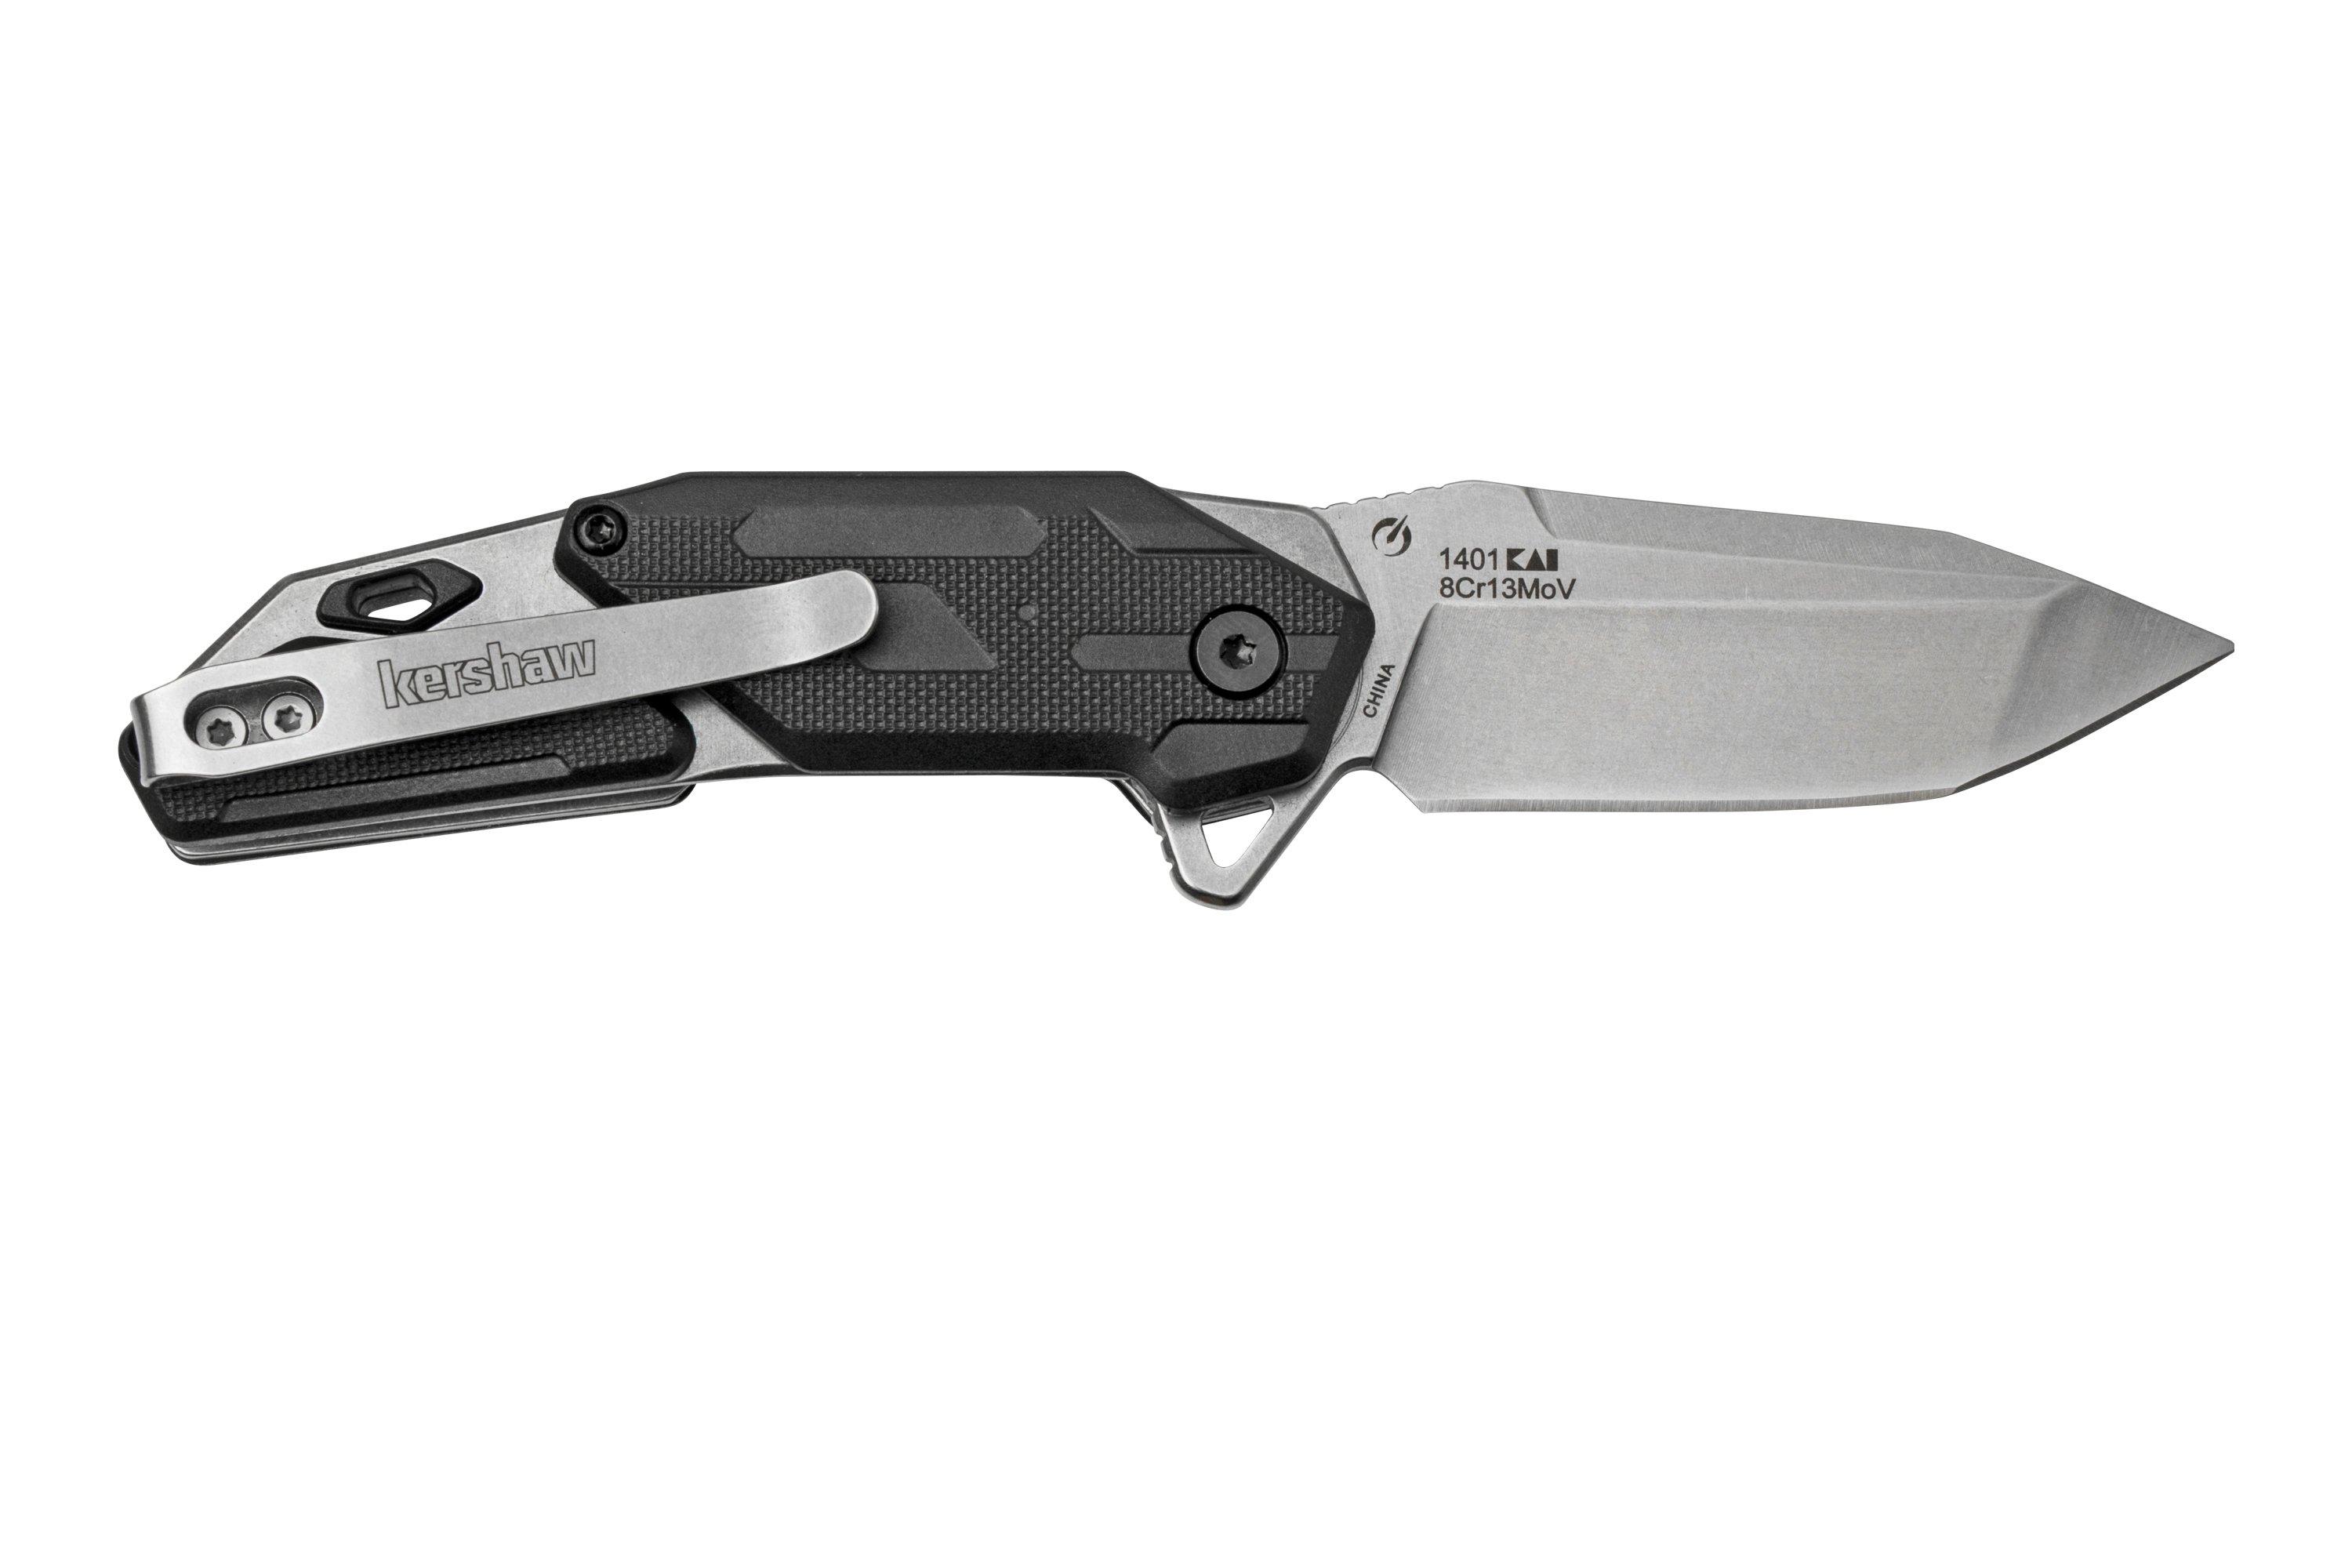 Kershaw Jetpack 1401 pocket knife  Advantageously shopping at